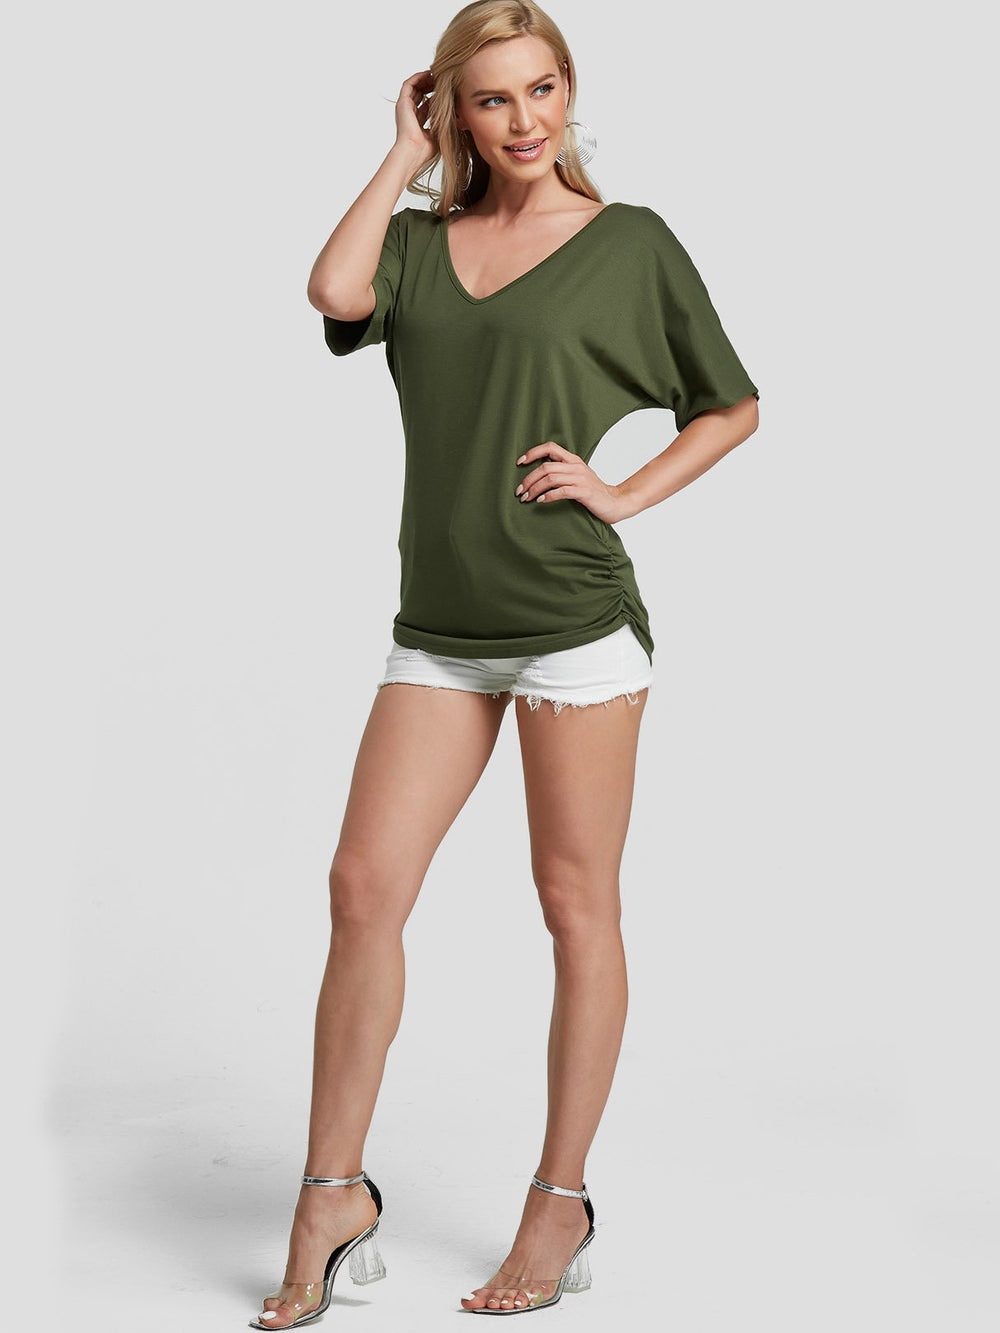 Womens Army Green T-Shirts